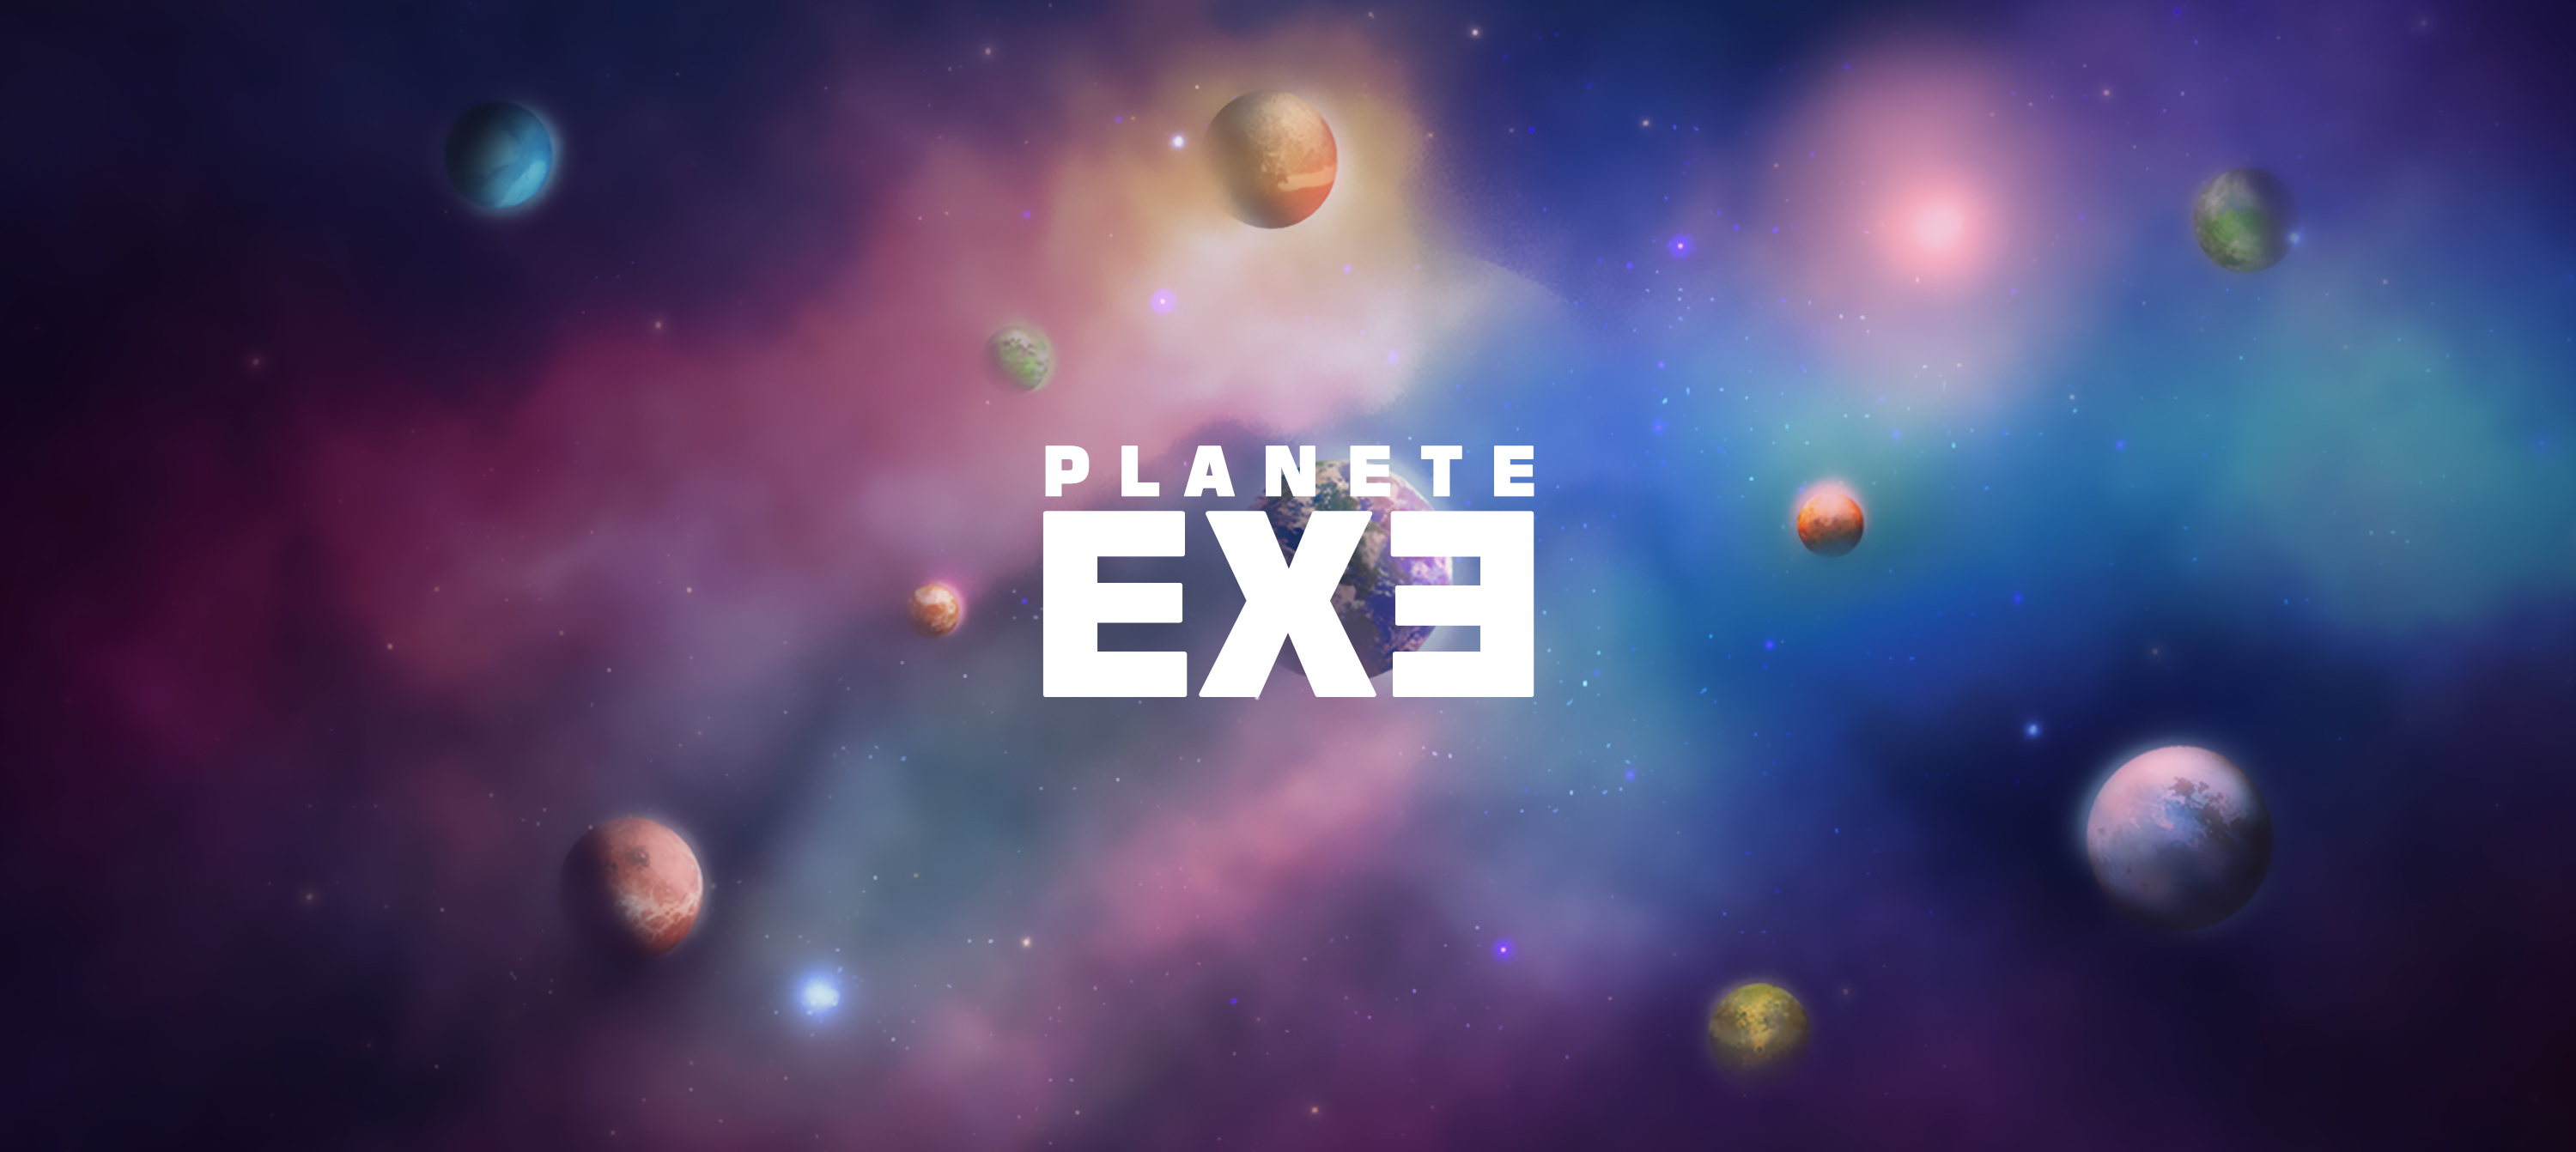 Planete EXE